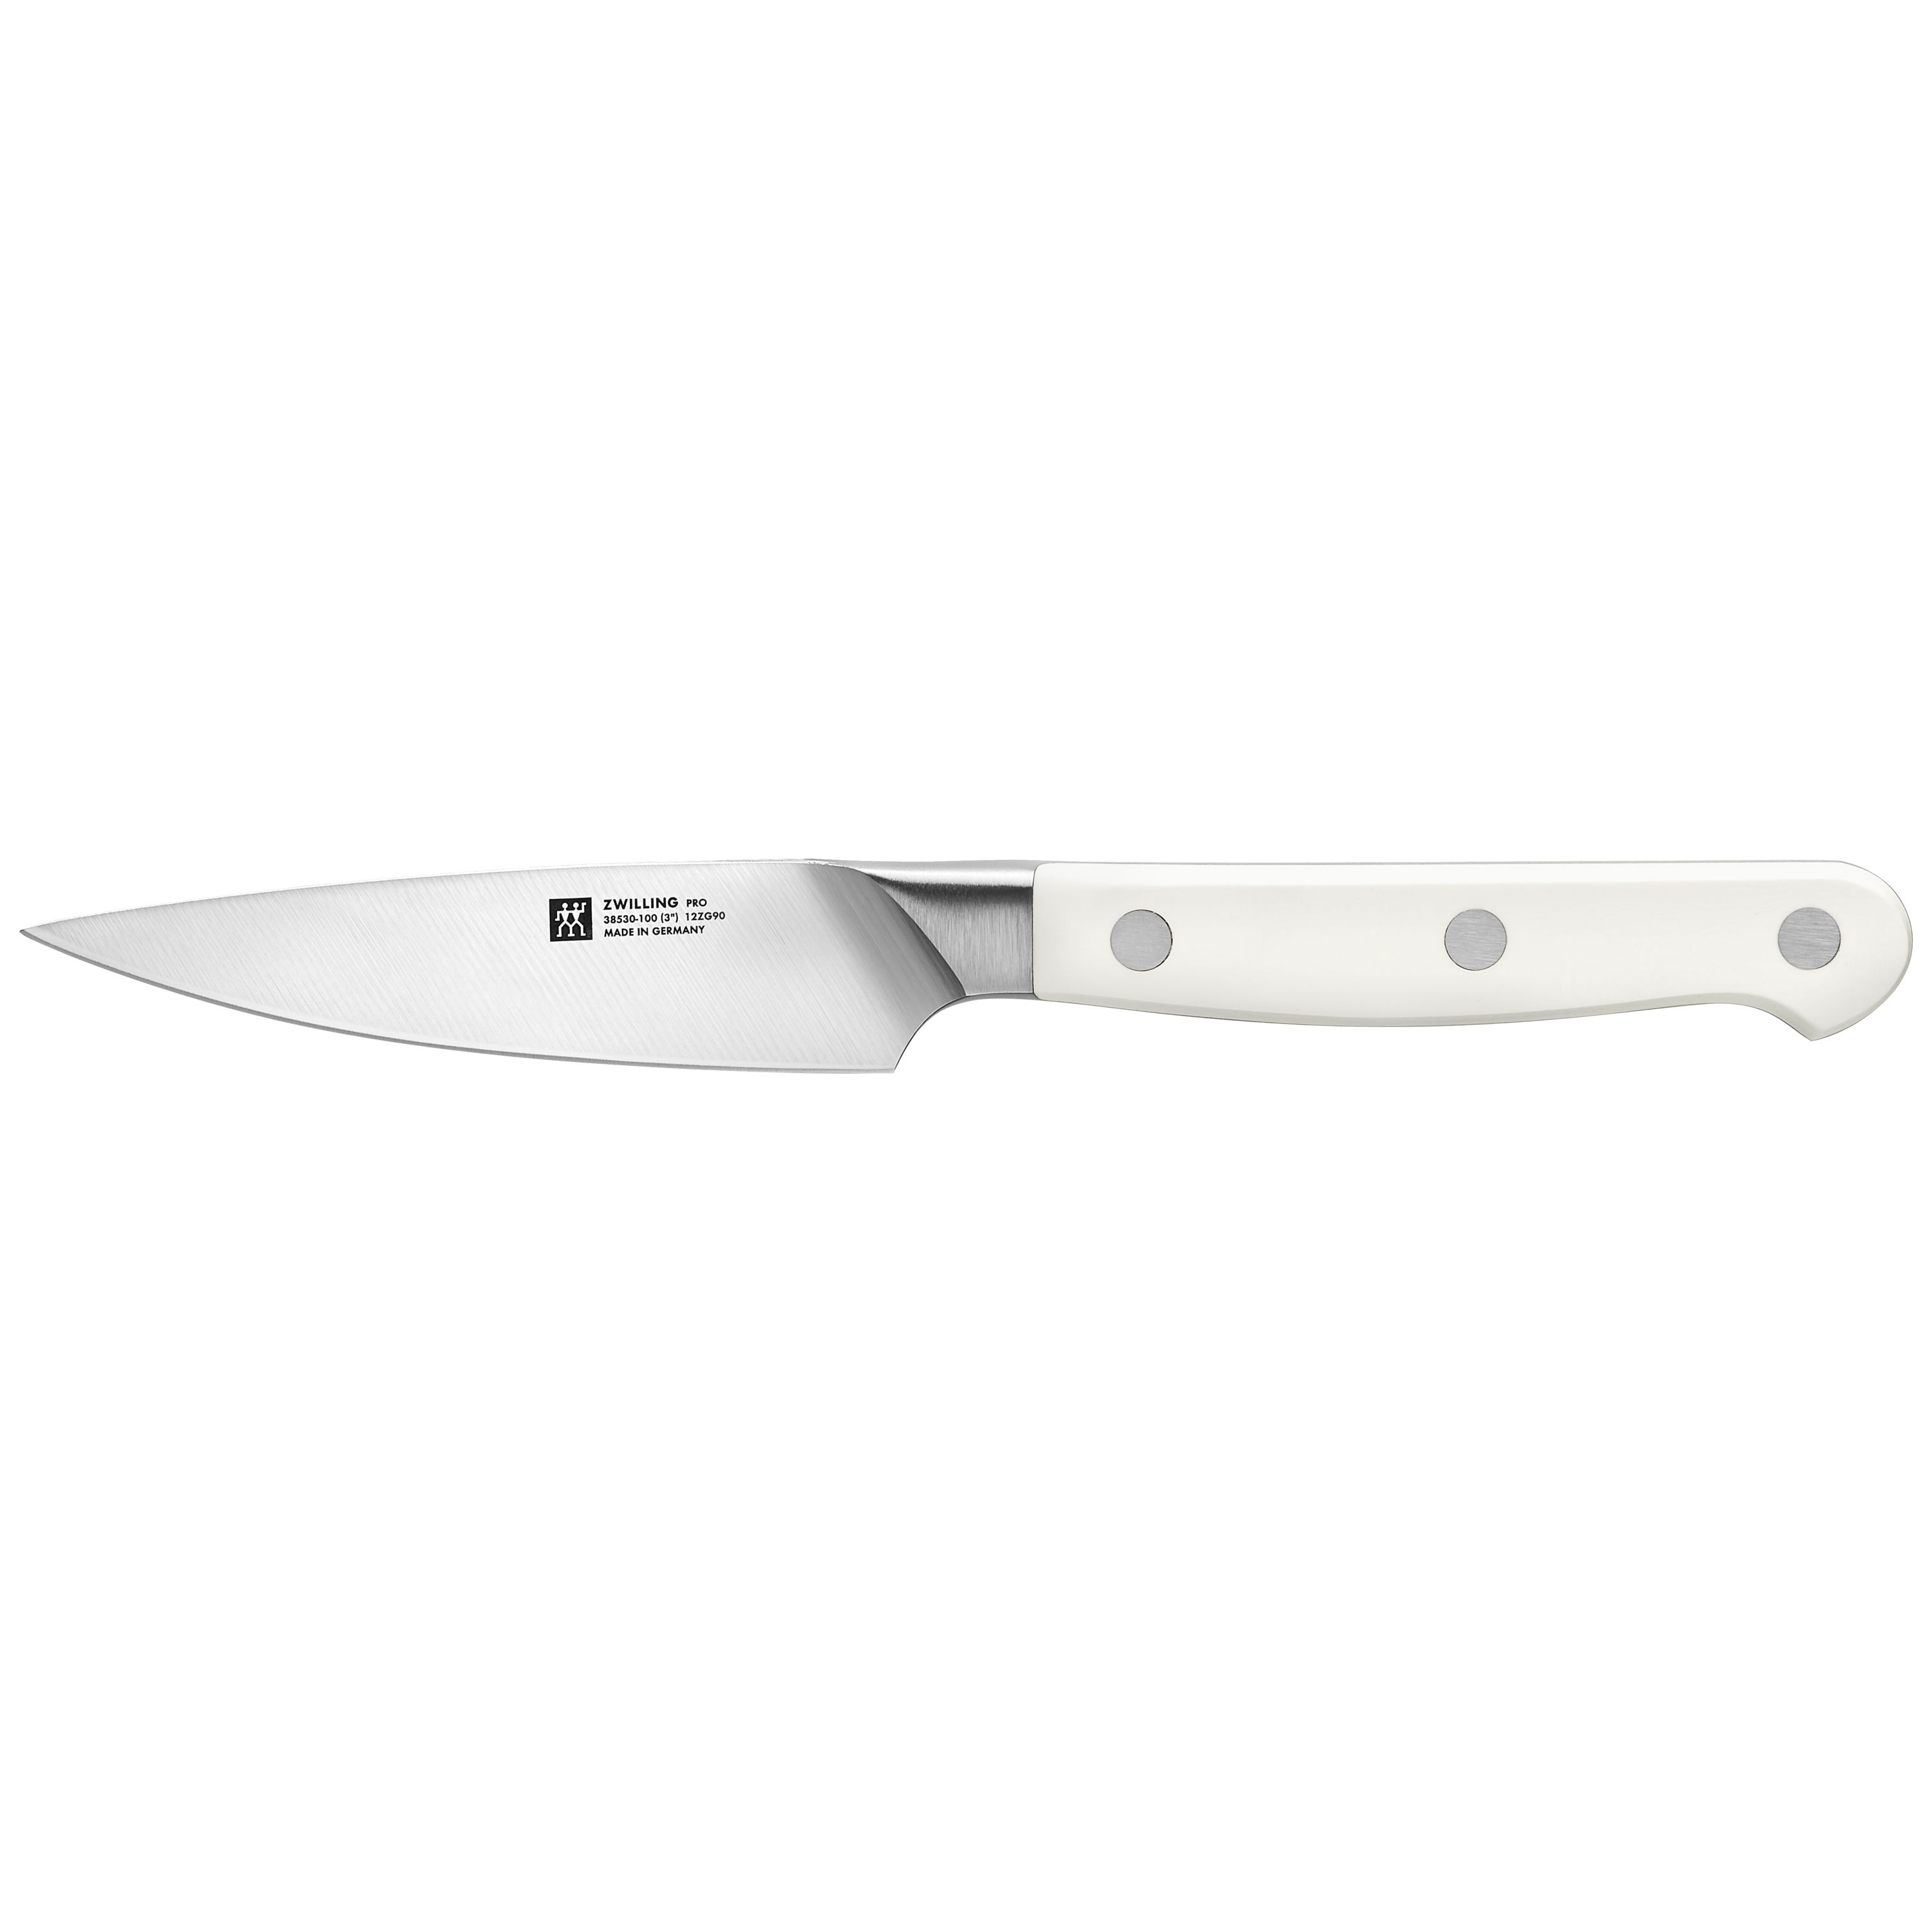 Zwilling Pro Le Blanc 8 Chef's Knife, White